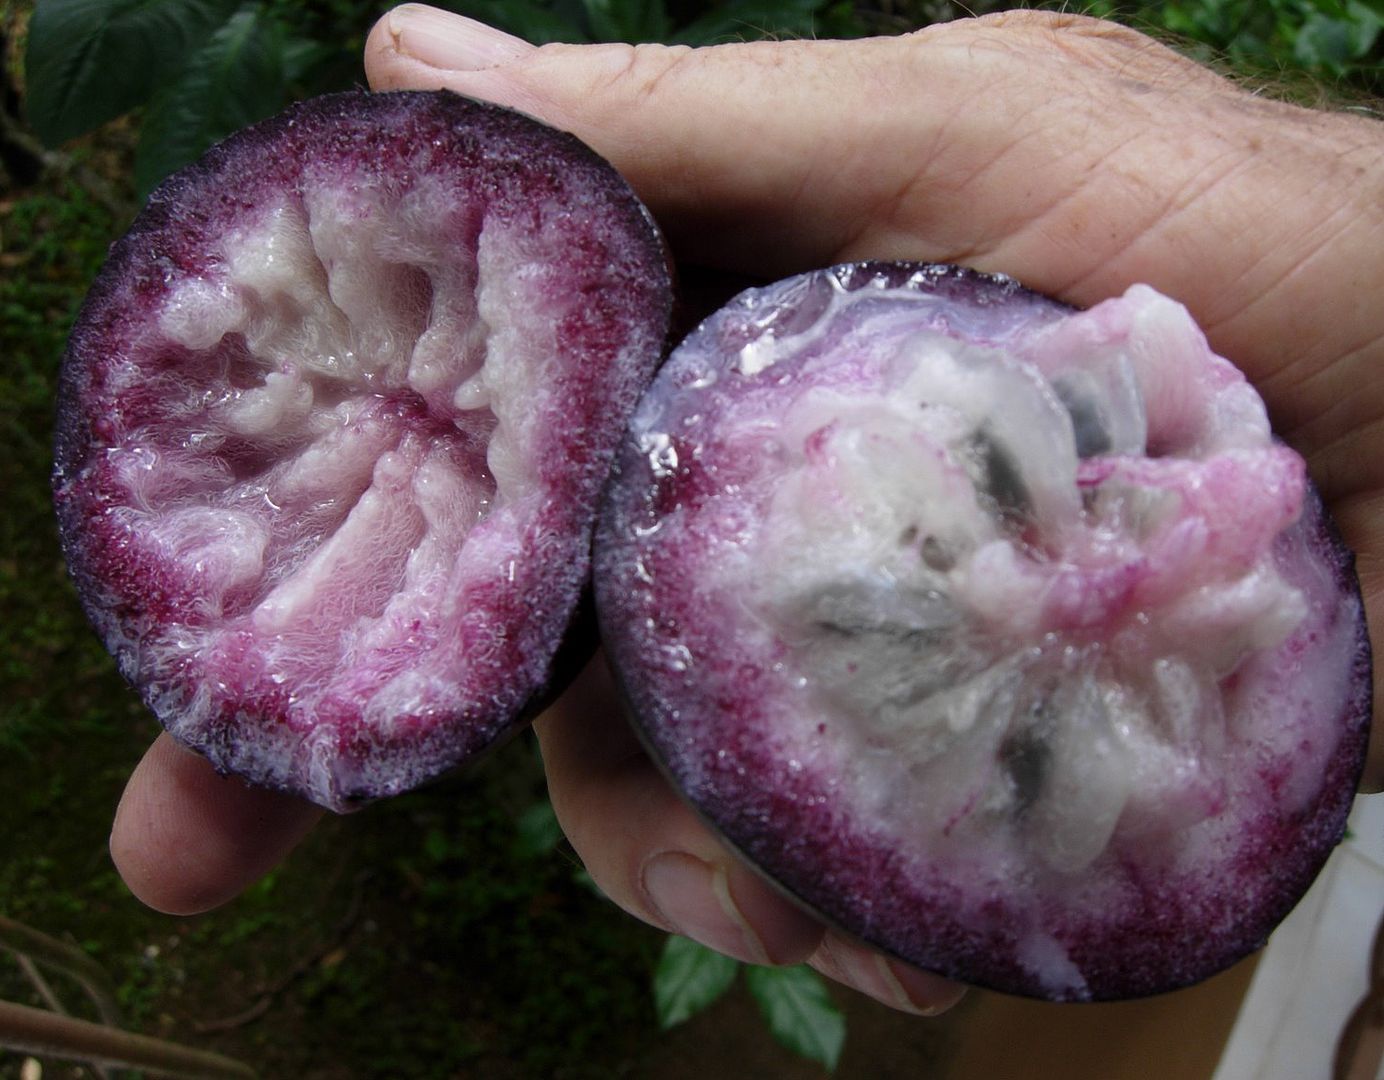 Purple Star Apple fruit has sweet clear light purplish whitish flesh that surrounds large black seeds.
Chrysophyllum cainito